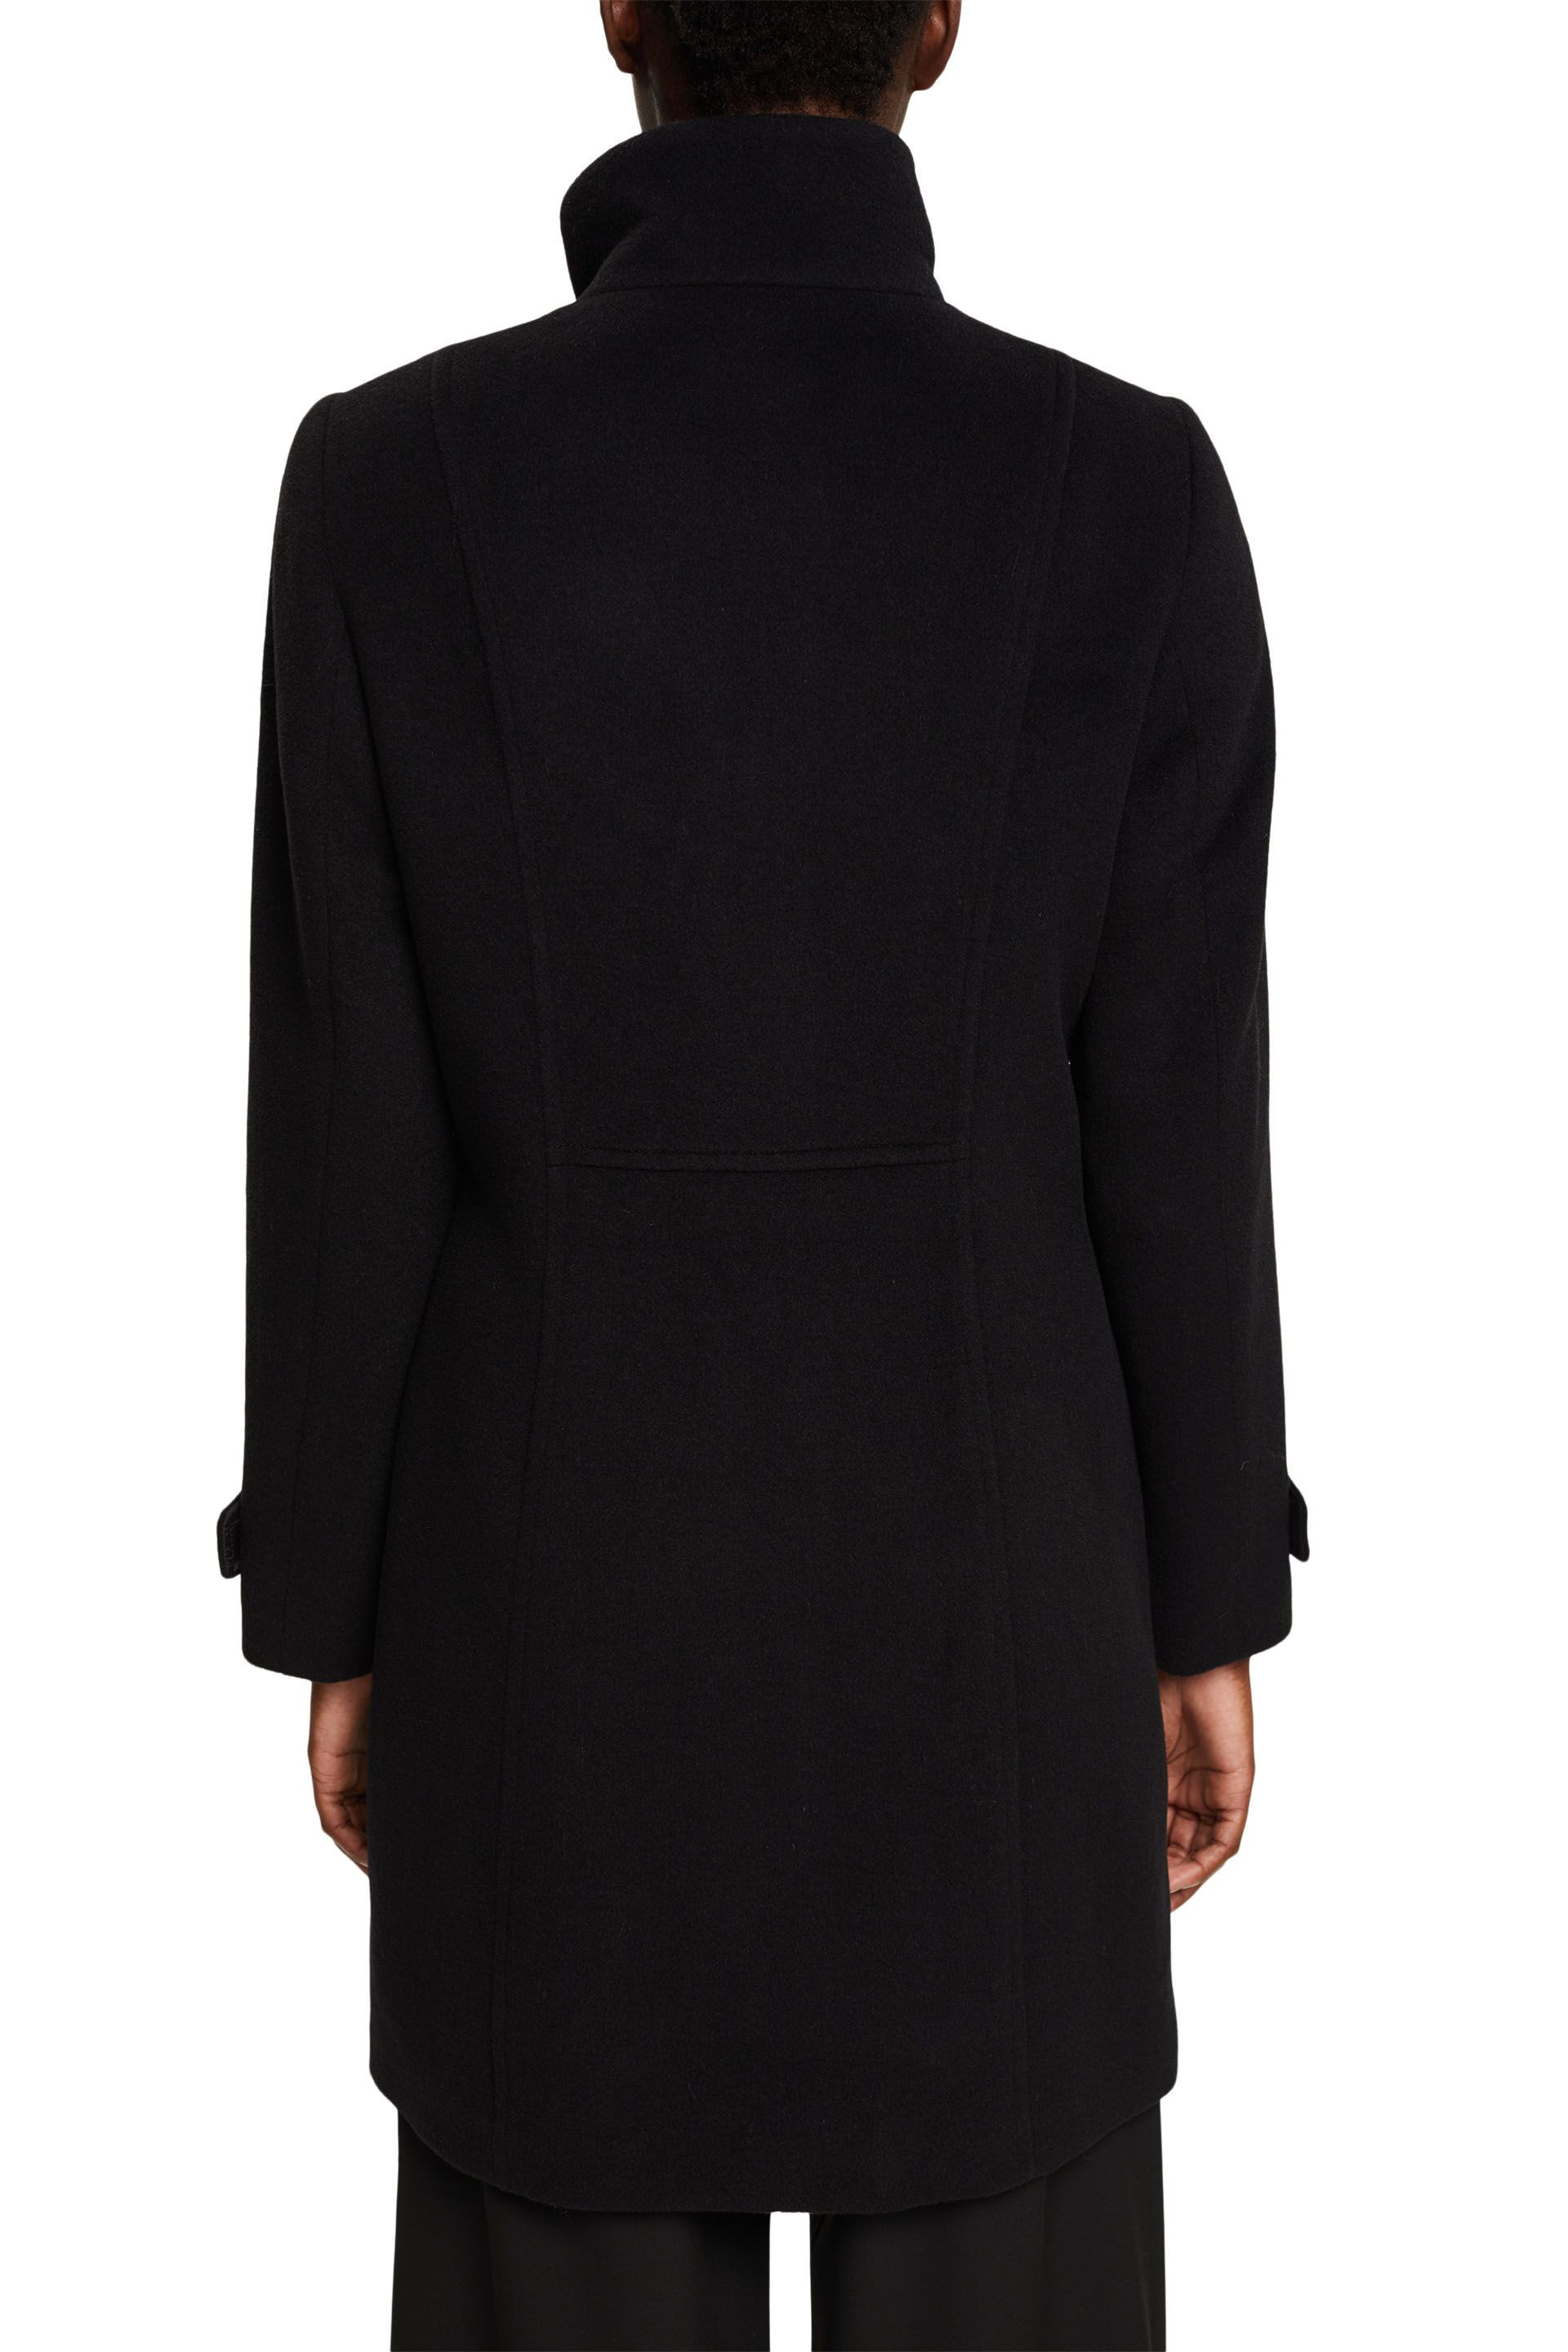 Collared coat, Black, large image number 2